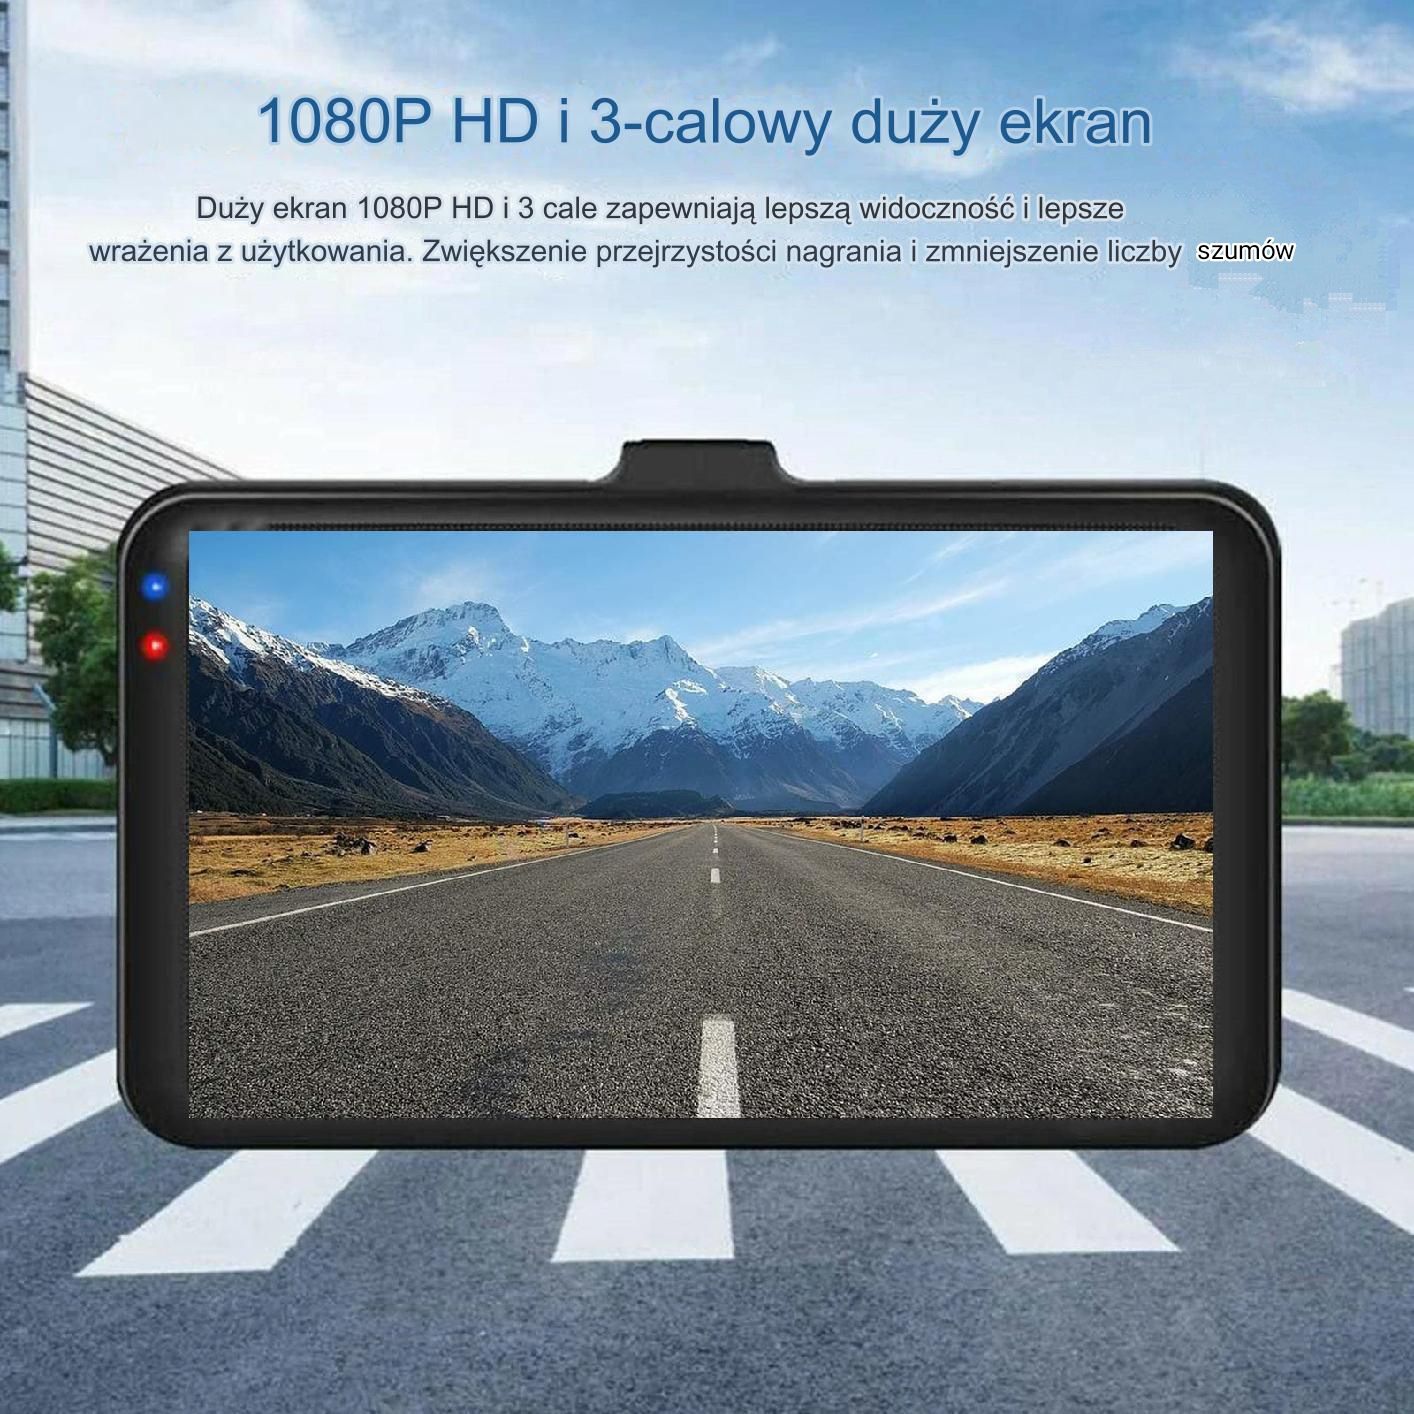 Wideorejestrator Rejestrator Kamera Samochodowa 1080p Menu PL +32GB